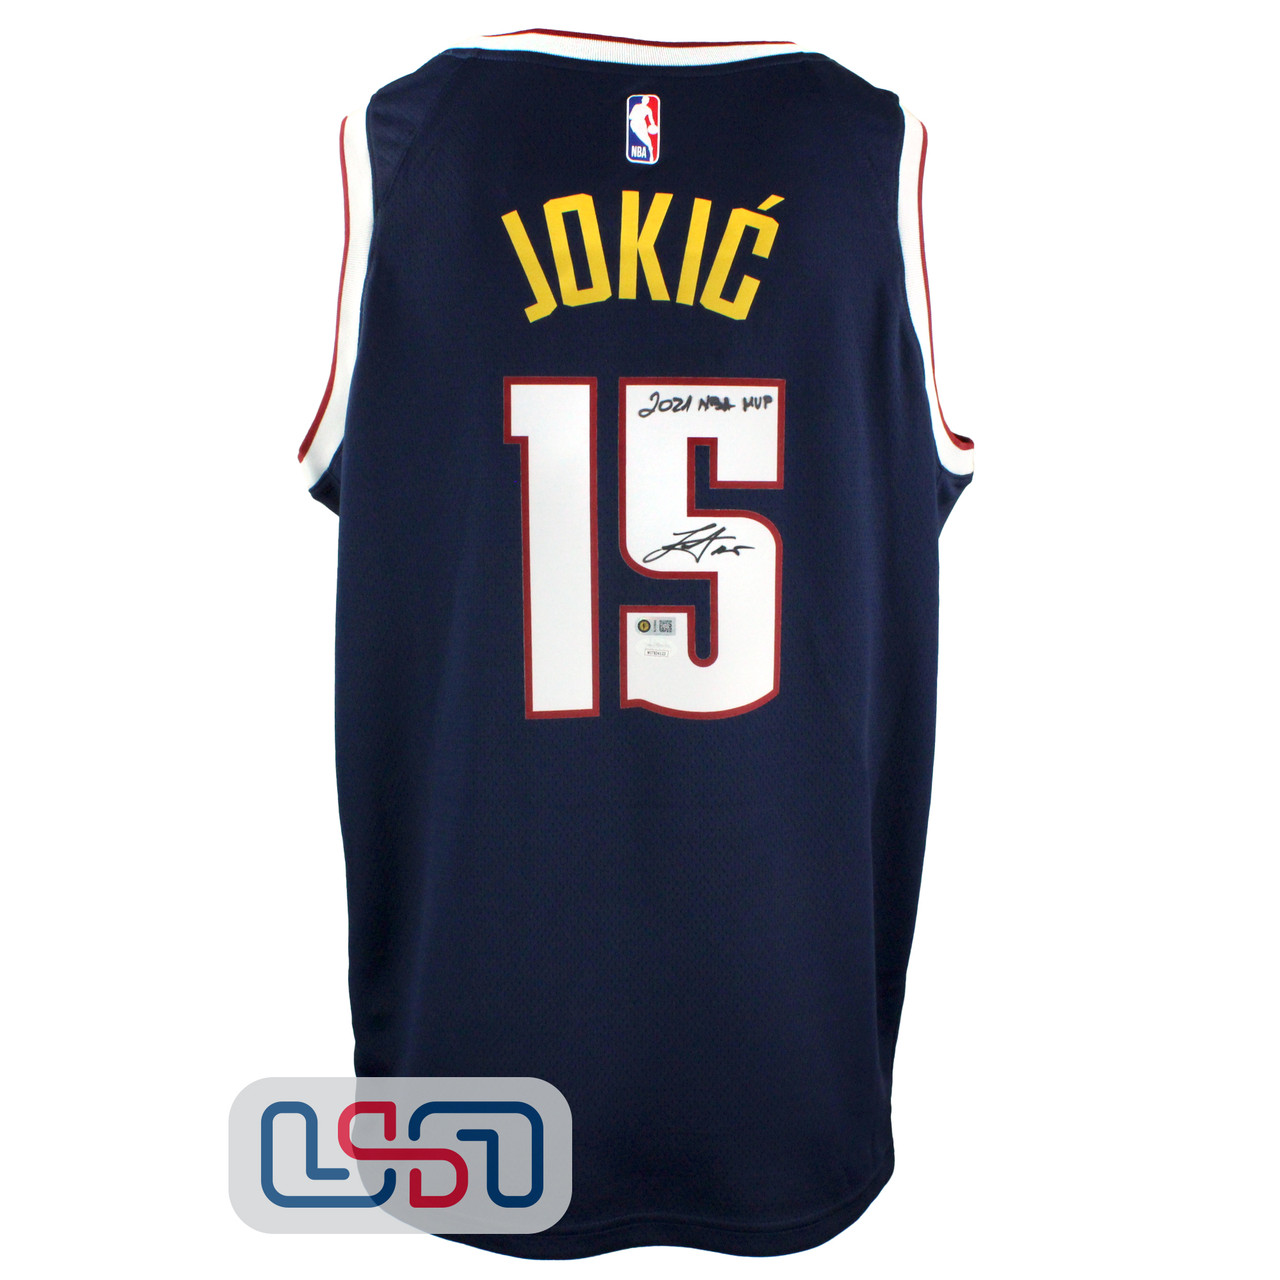 NBA Finals MVP Nikola Jokić's Game-Worn Gear Is a Buy for Sports